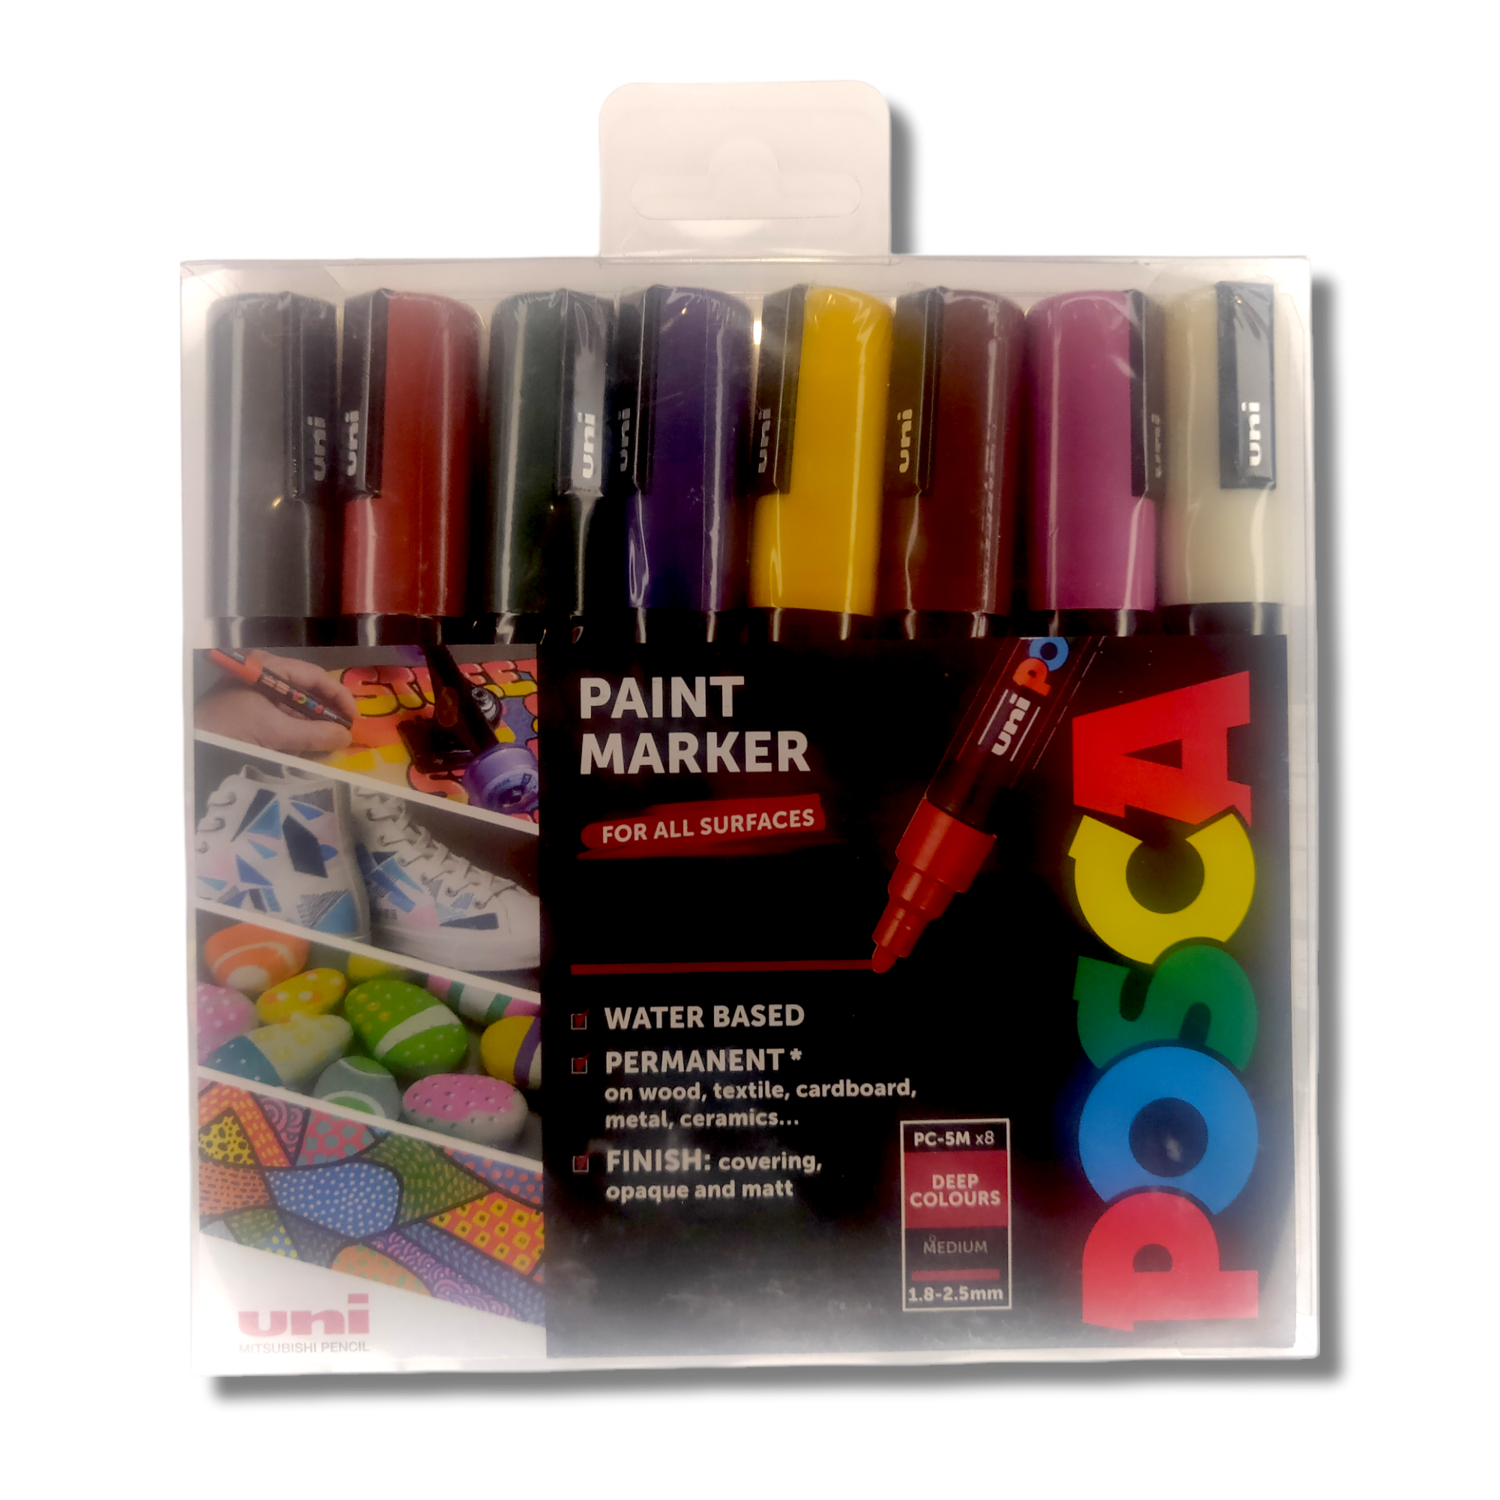 POSCA 8x Medium Deep Colours Paint Marker Pens - For All Surfaces (PC-5M)